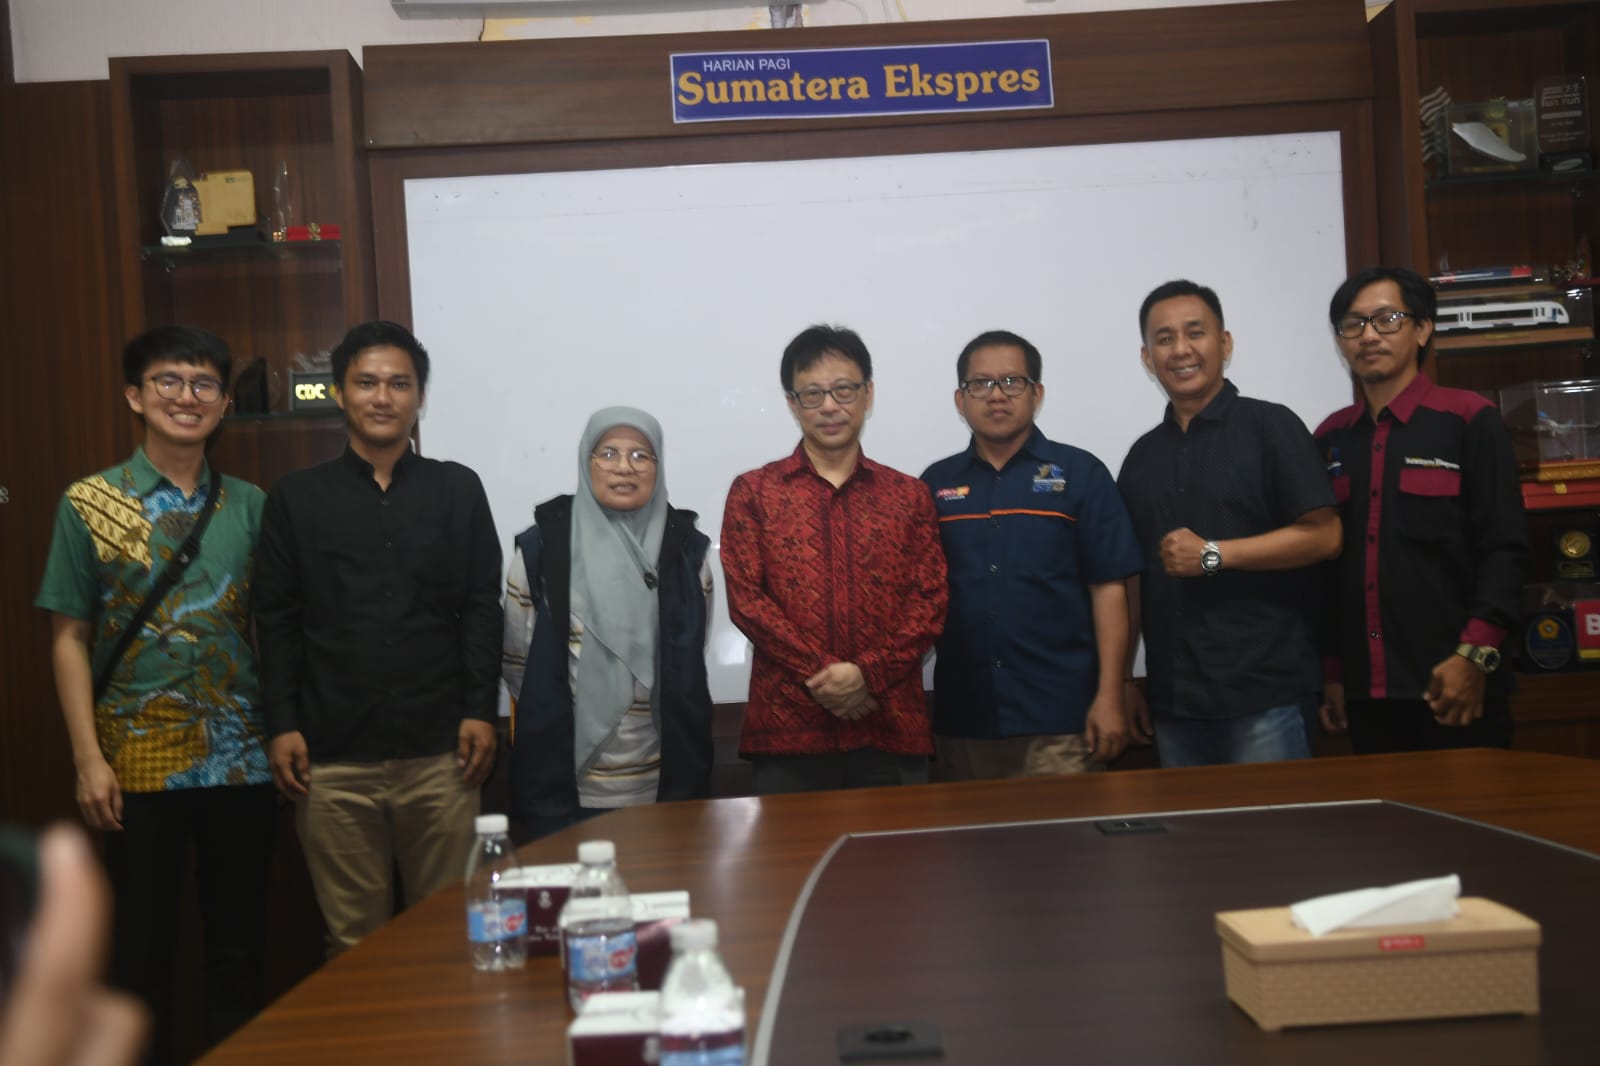 Konsulat Jenderal Singapura Kunjungan ke Sumatera Ekspres, Jalin Kerjasama Pendidikan, Ekonomi dan Politik